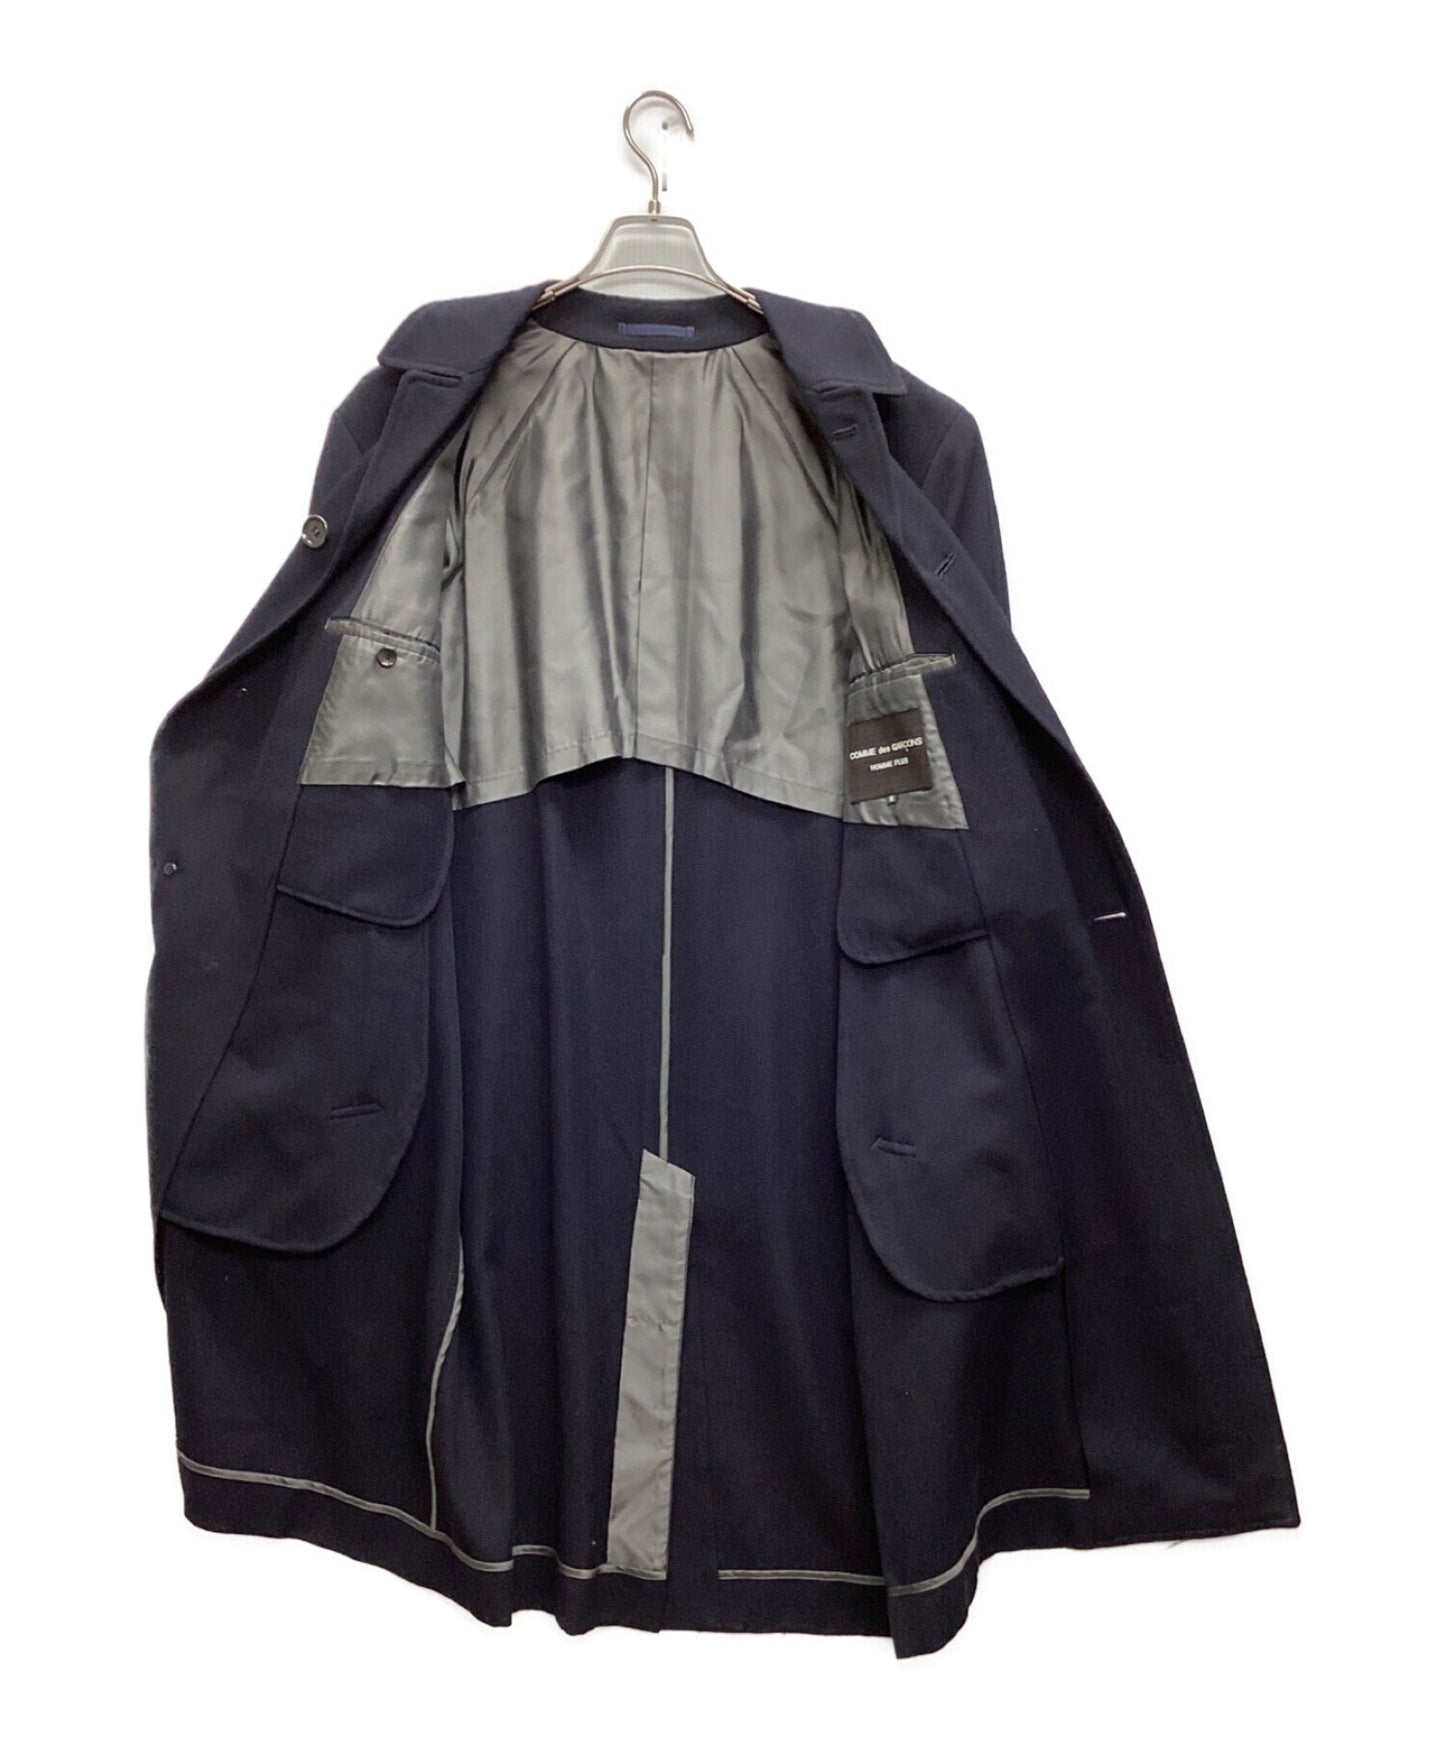 [Pre-owned] COMME des GARCONS HOMME PLUS Wool Gabardine Chester Coat PC-04010M